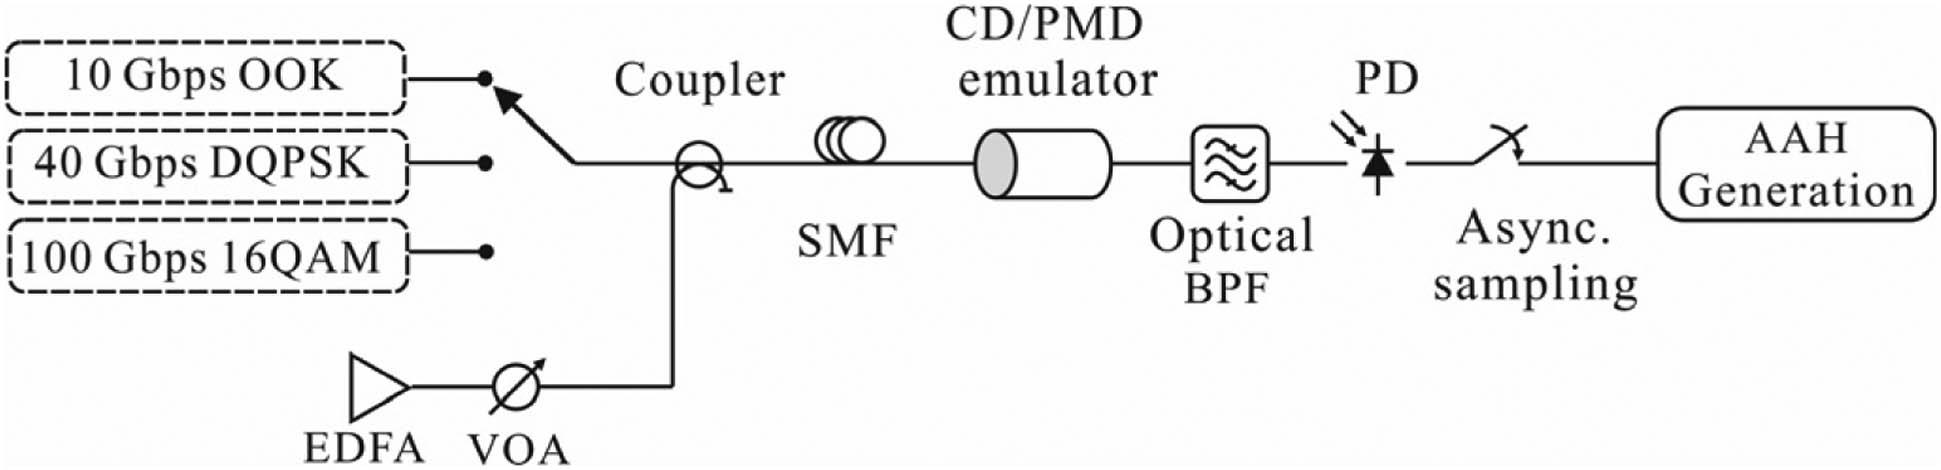 Sketch of the emulated transmission system for asynchronous amplitude histogram generation. EDFA, erbium-doped fiber amplifier; SMF, single-mode fiber; CD/PMD, chromatic dispersion/polarization mode dispersion; BPF, band-pass filter; PD, photodetector; AAH, asynchronous amplitude histogram.